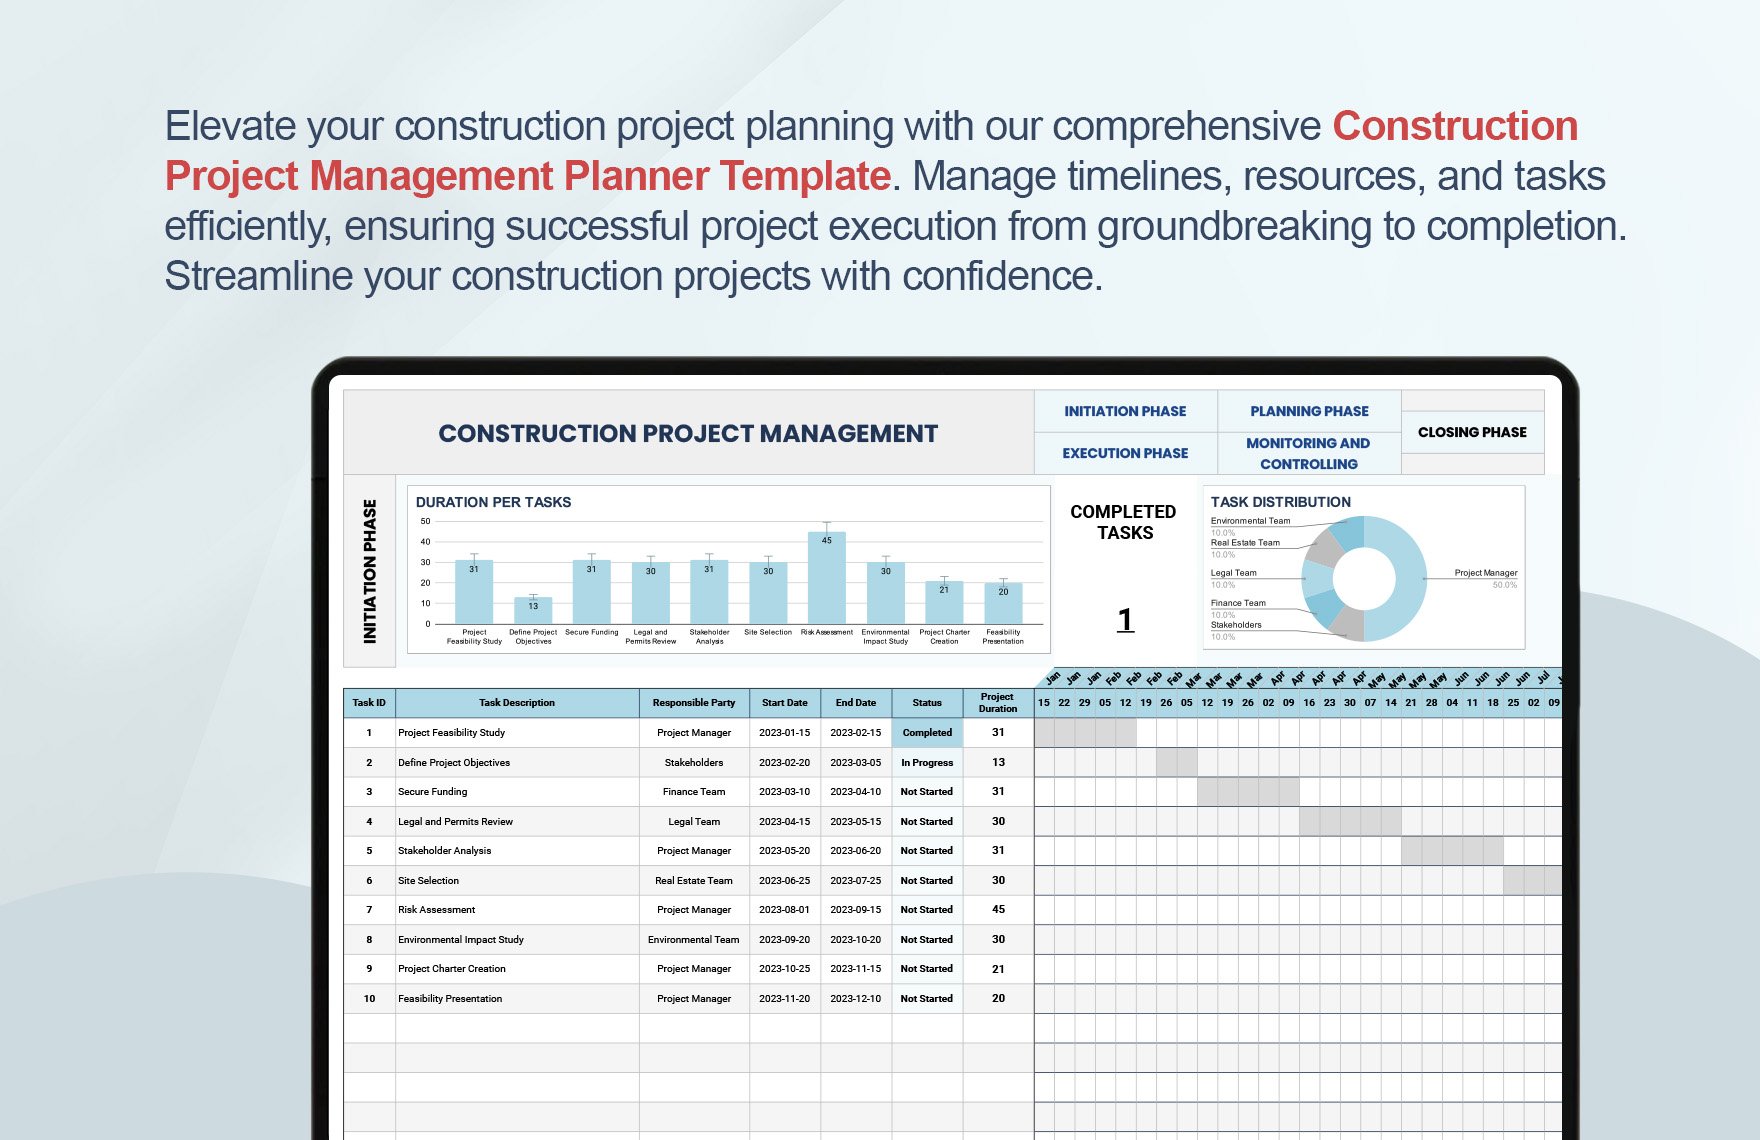 Construction Project Management Template